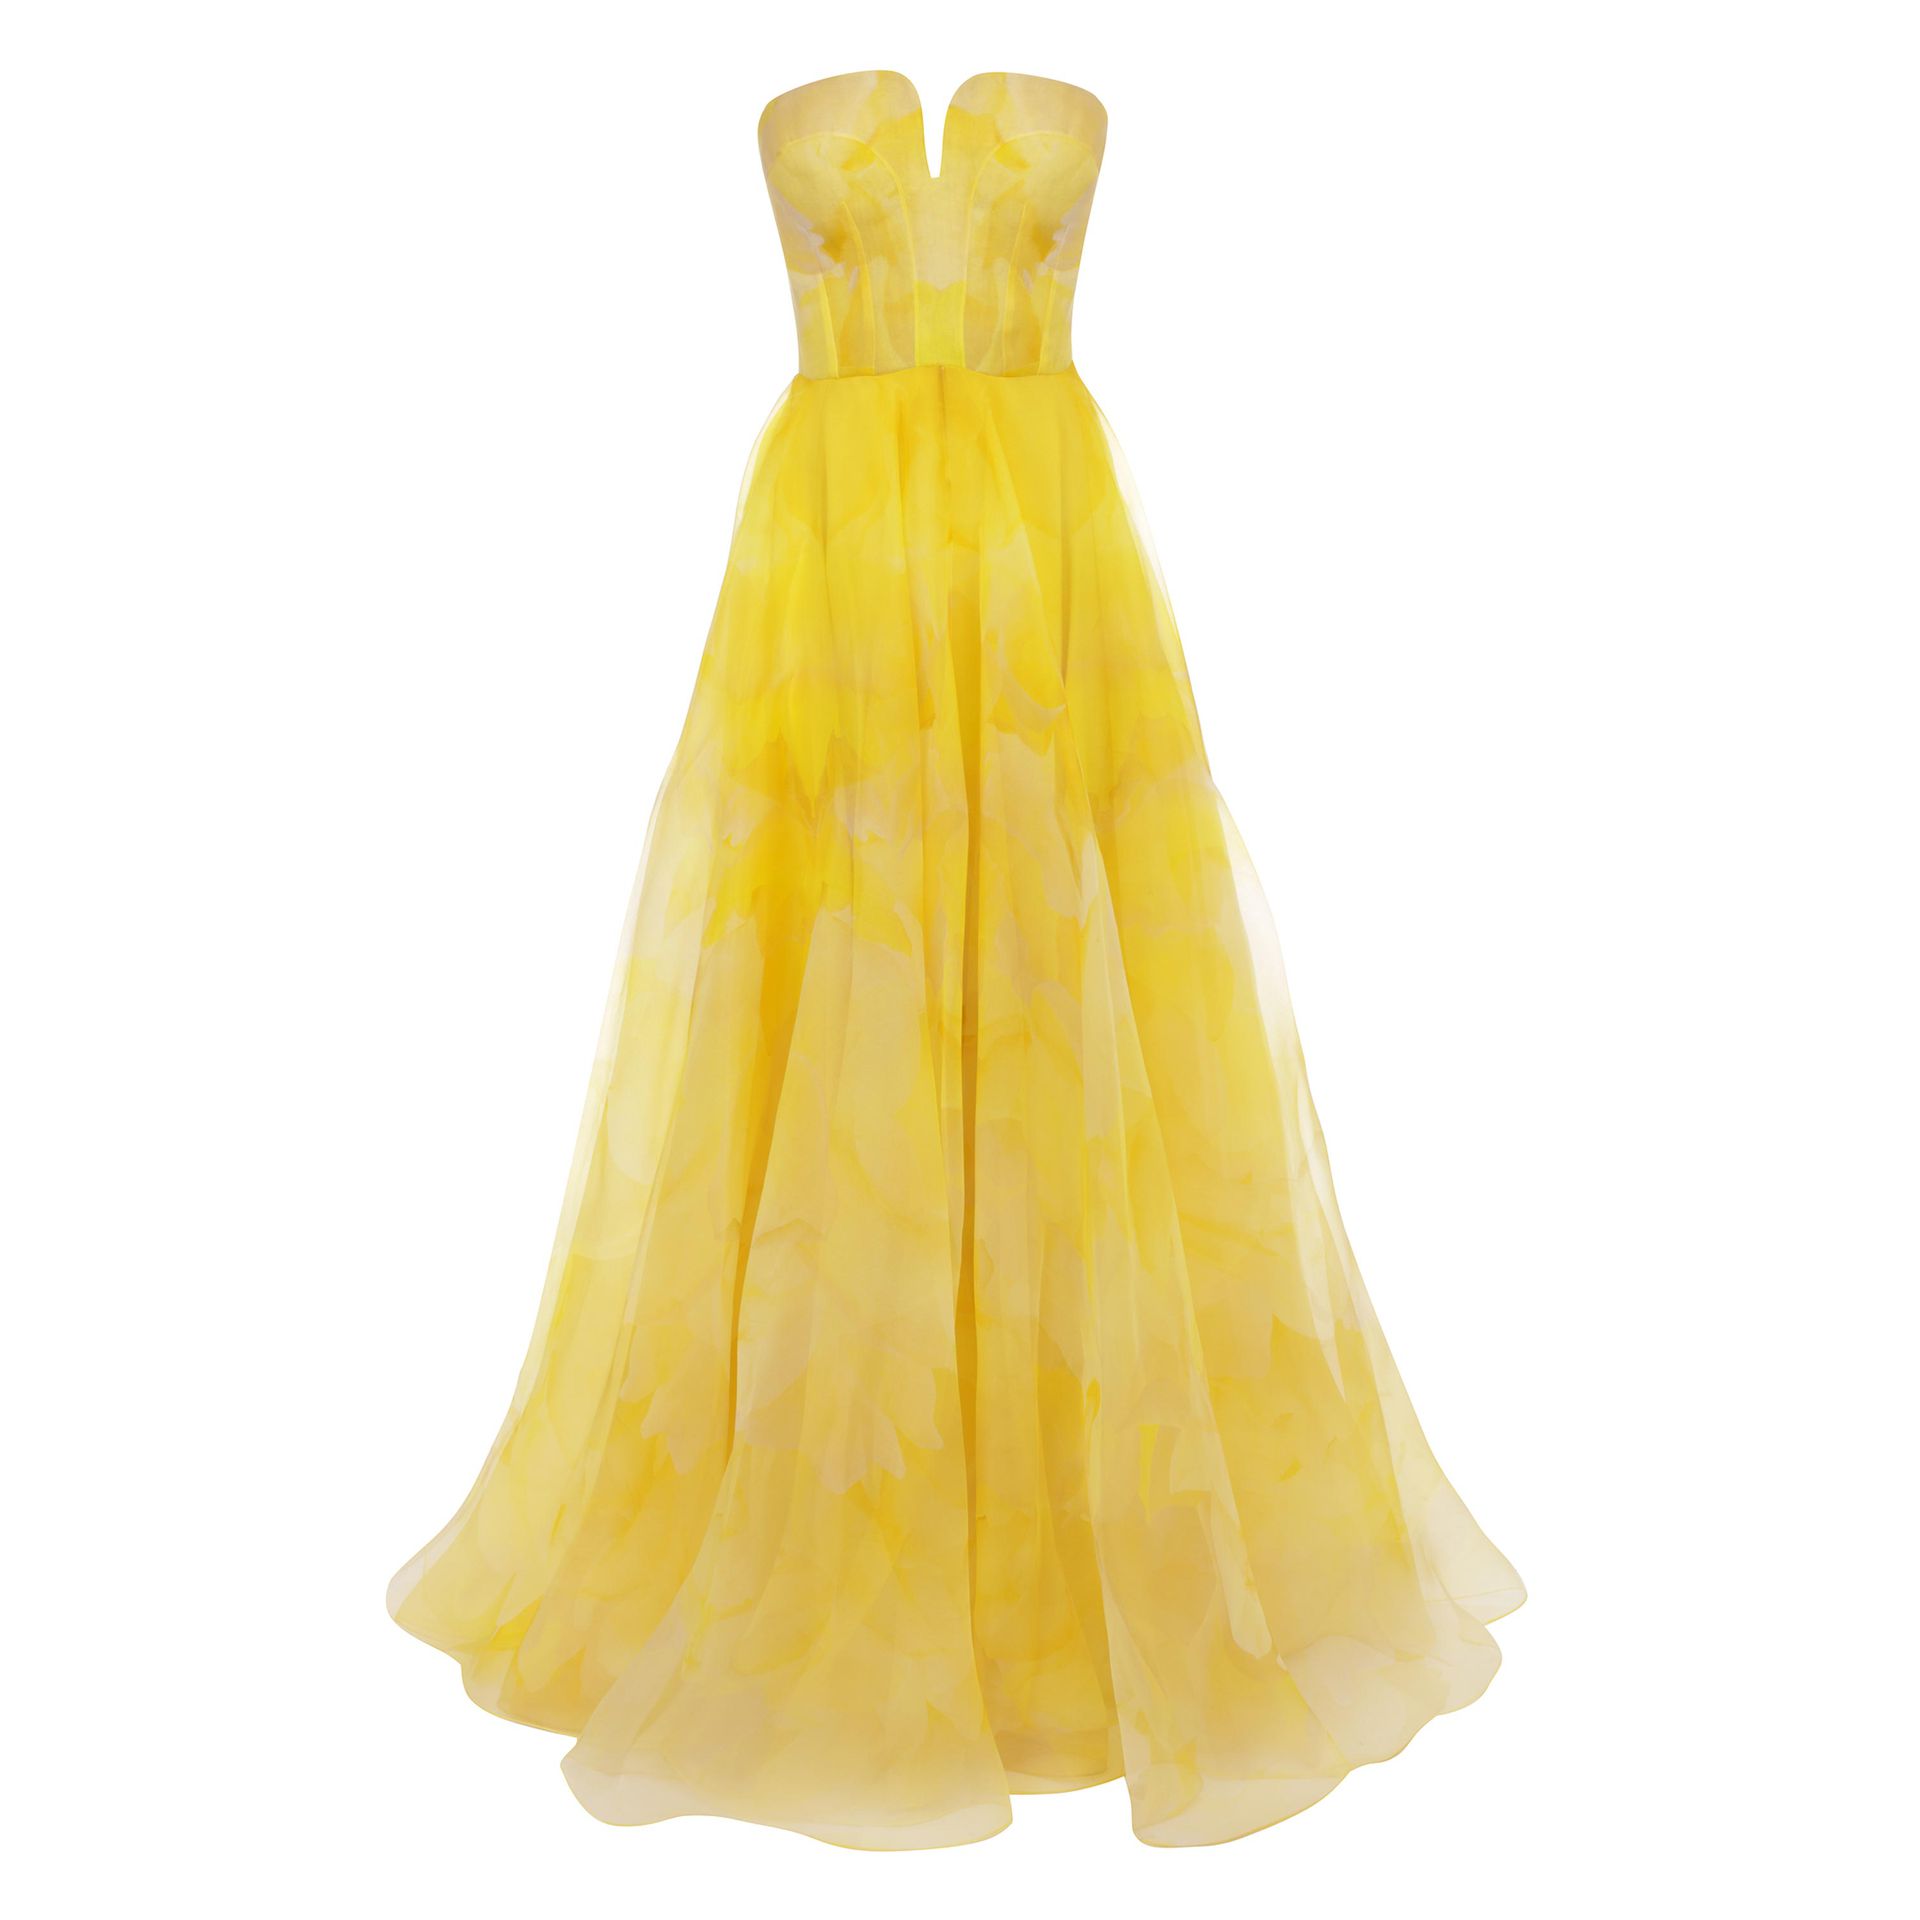 Lyst - Alexander mcqueen Poppy Print Organza Bustier Dress in Yellow